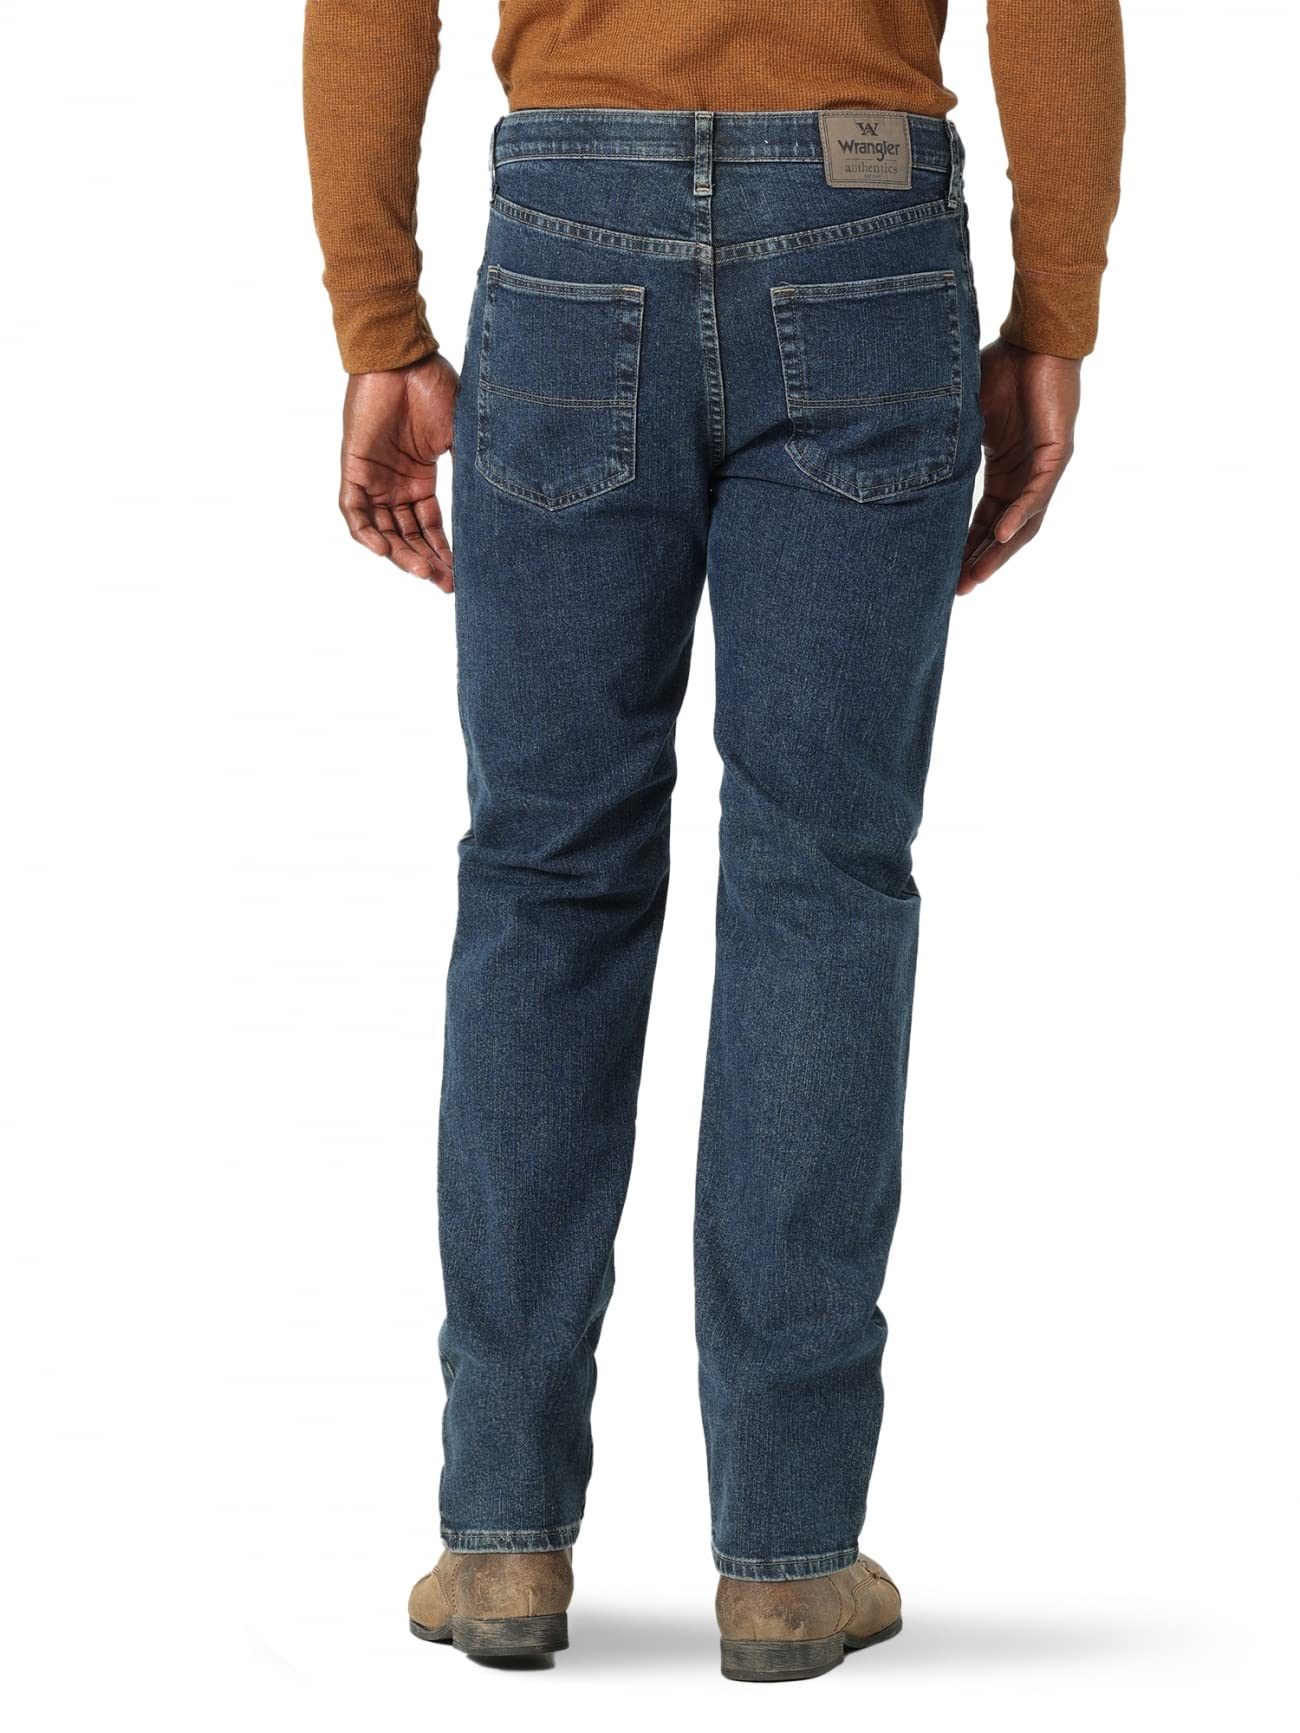 Wrangler Authentics Men's Regular Fit Comfort Flex Waist Jean, Dark Stonewash, 33W x 32L